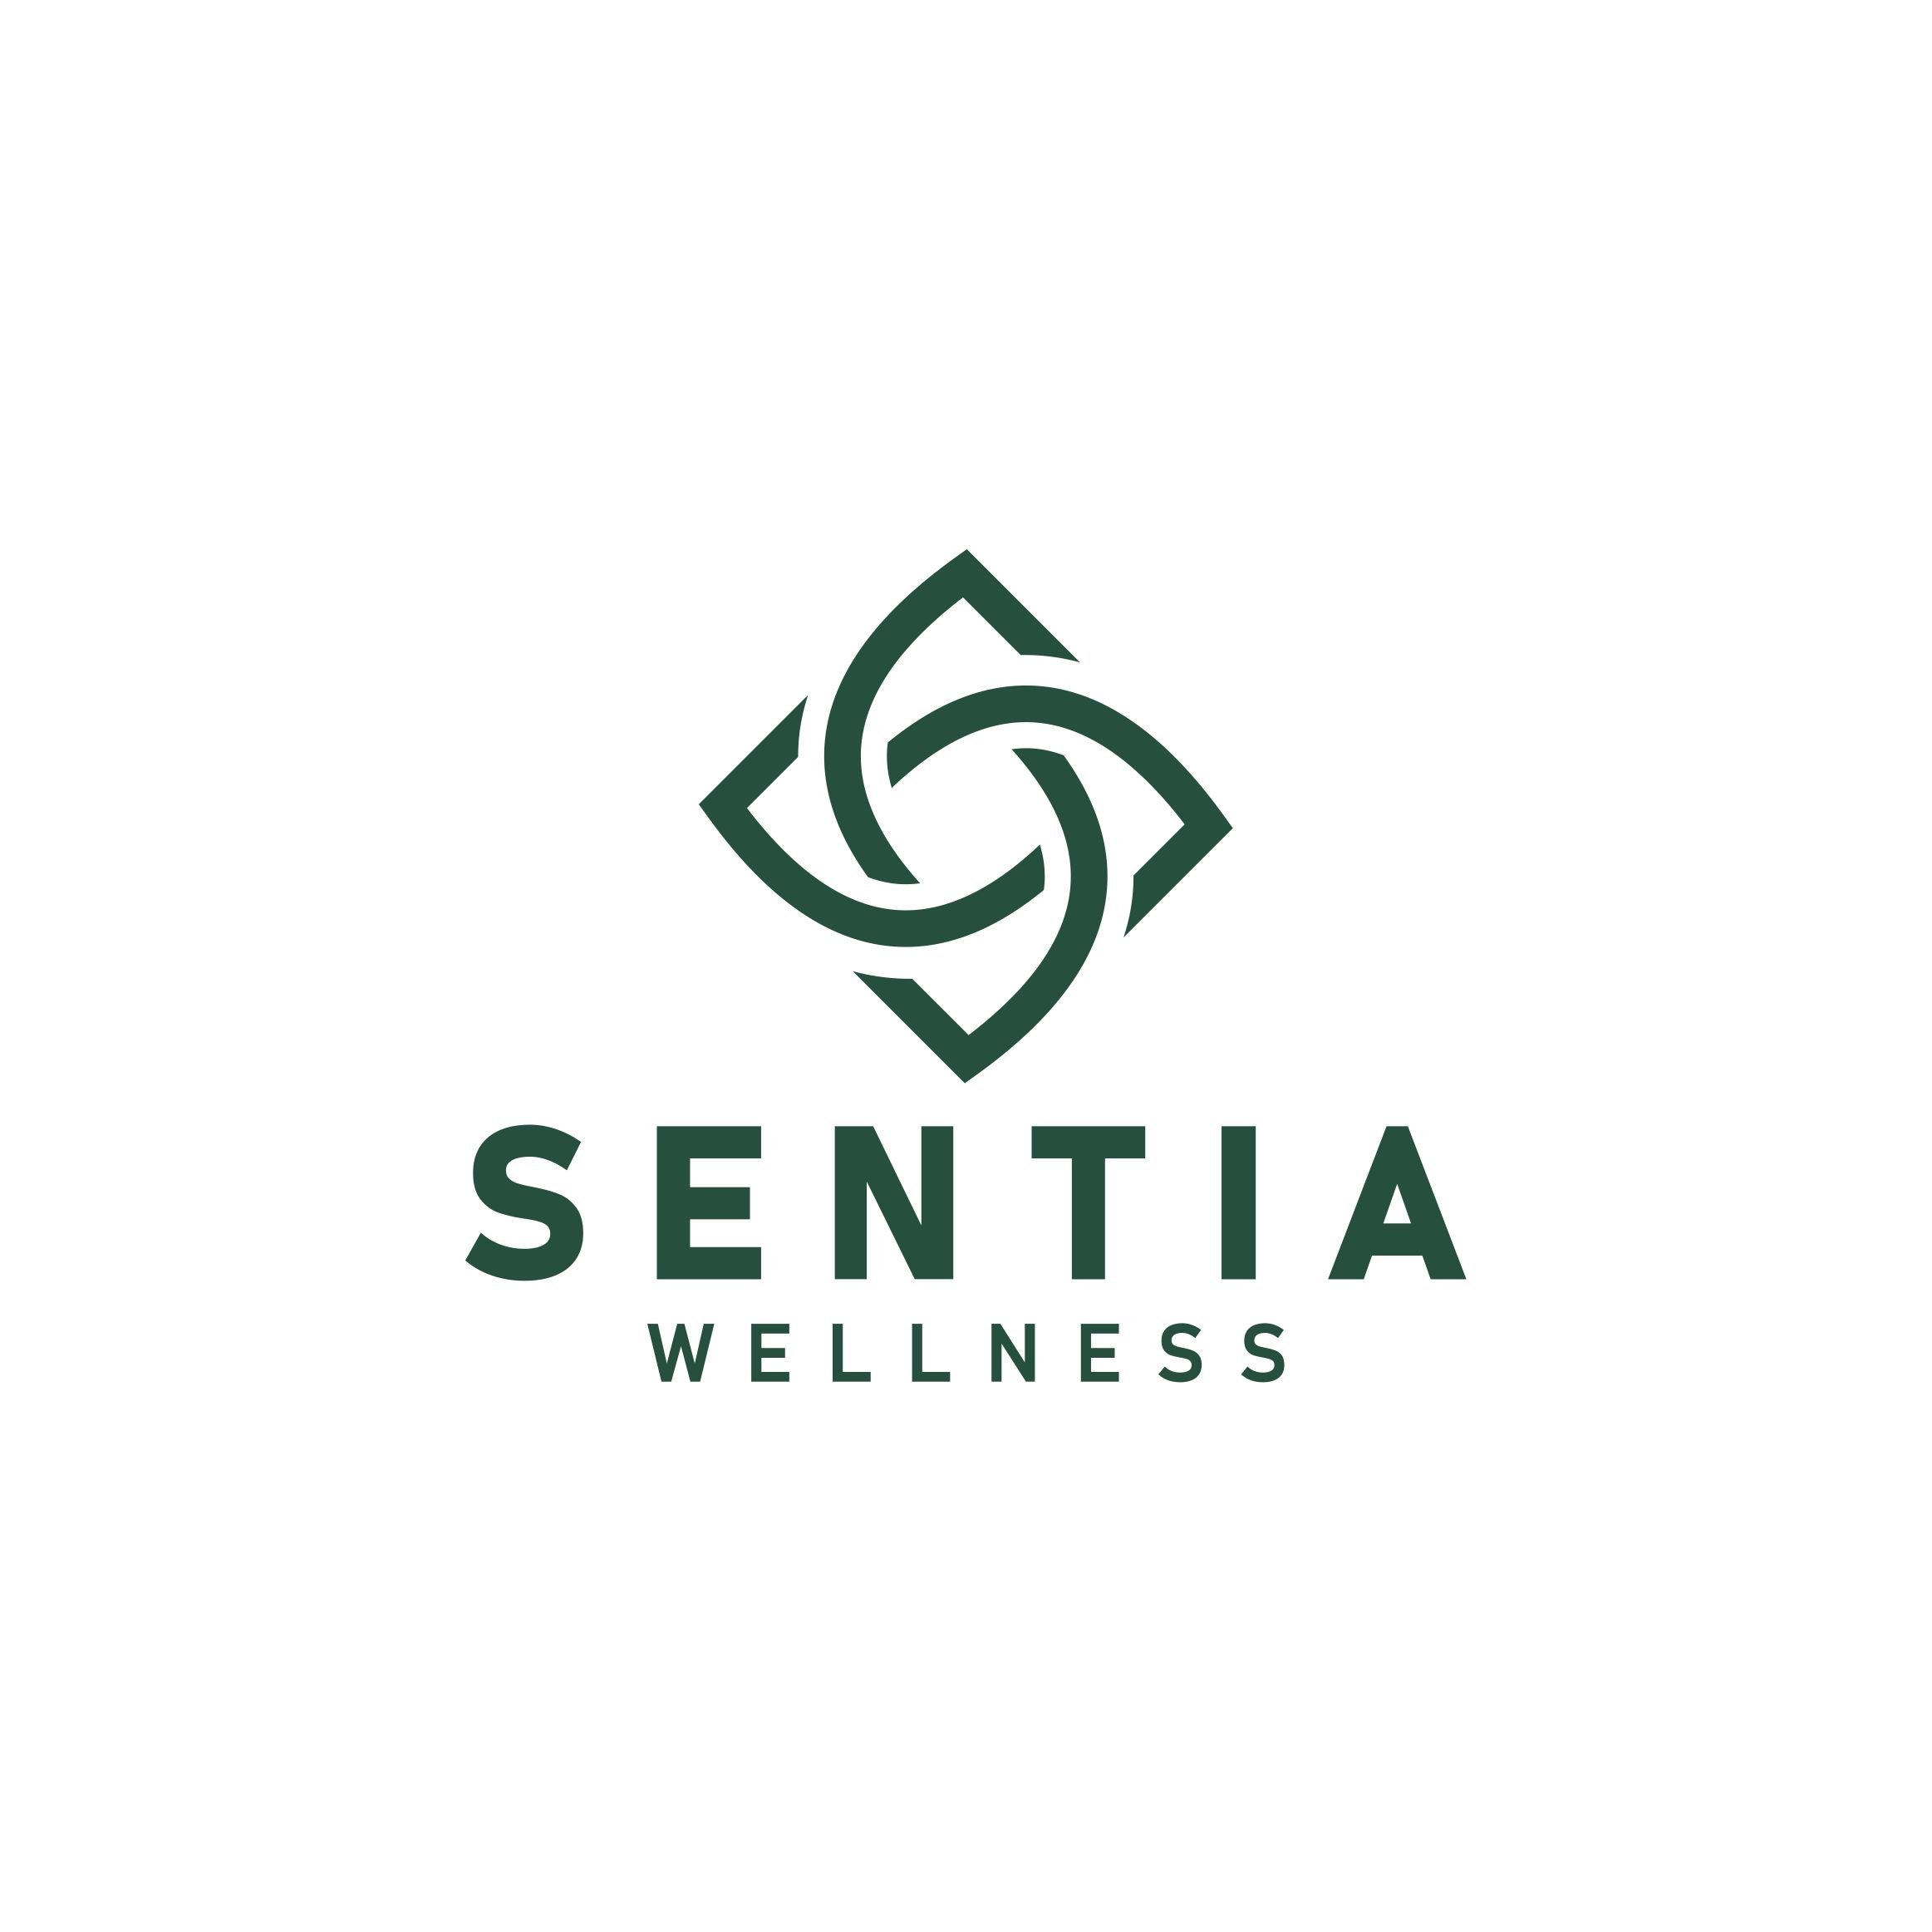 Sentia Wellness